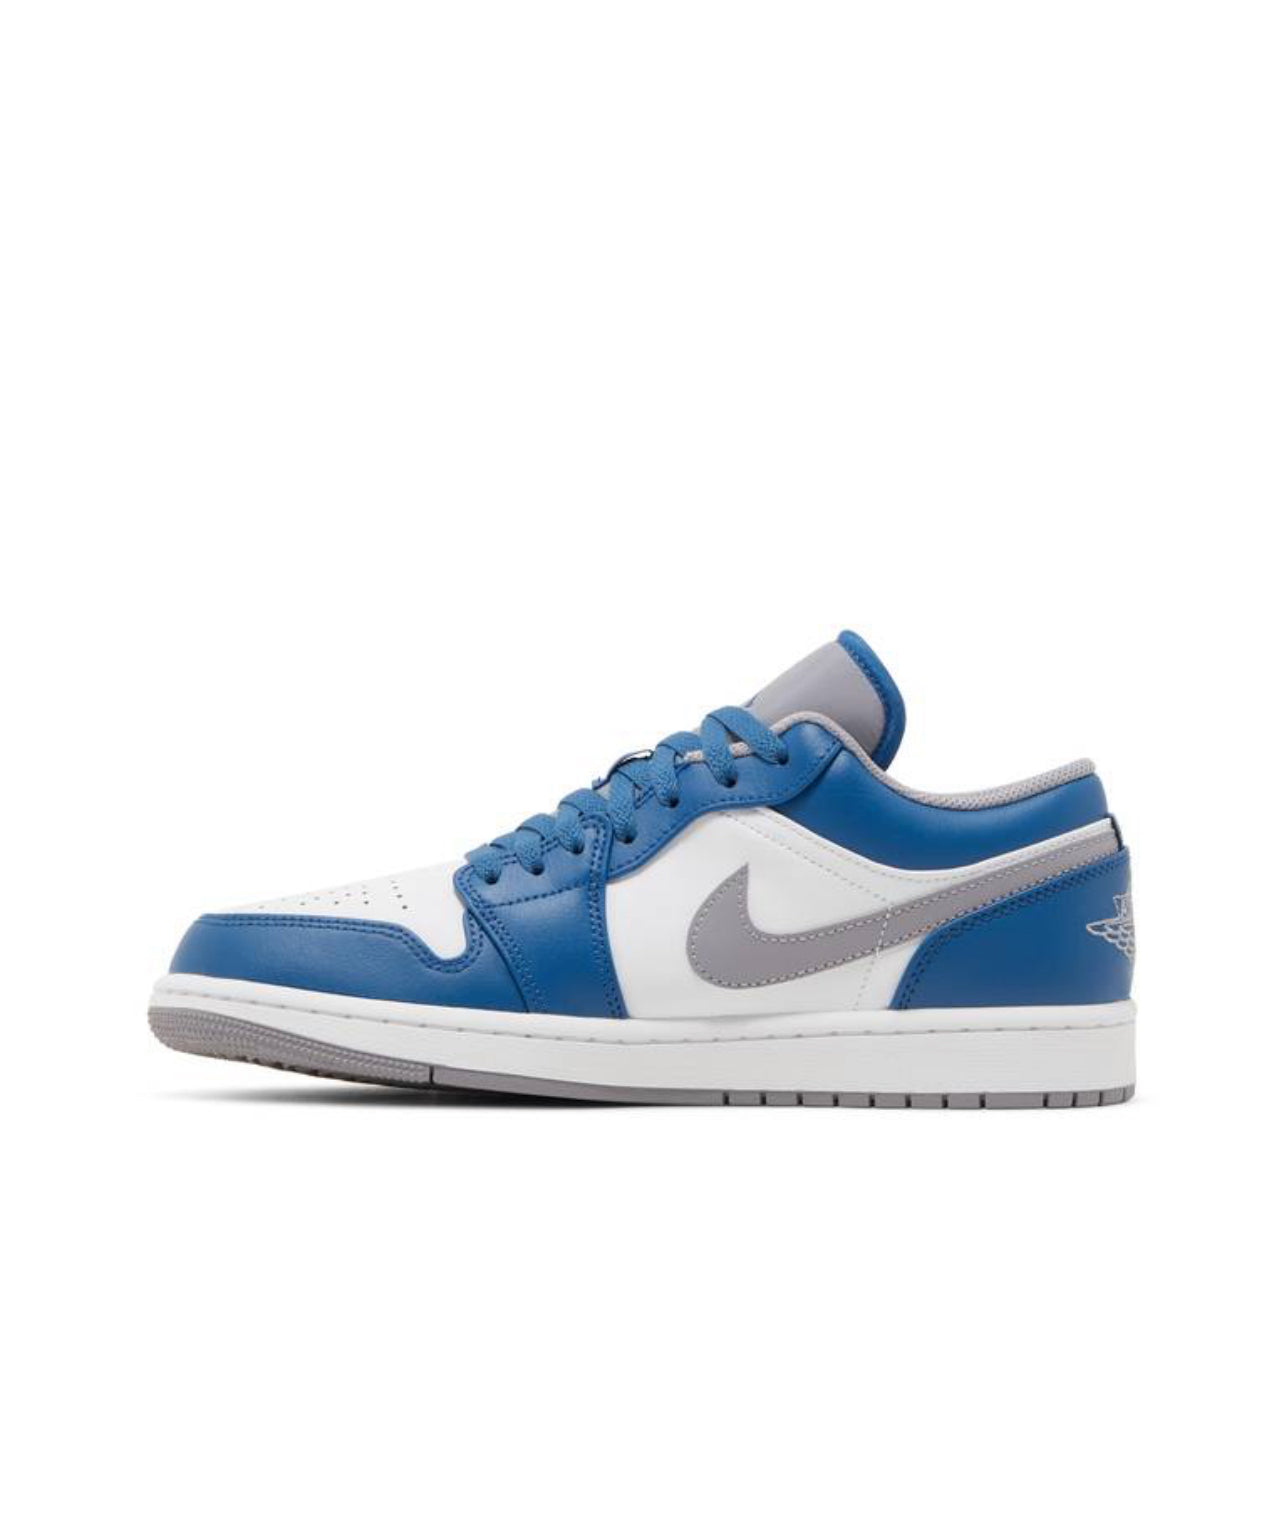 Nike Air Jordan 1 Low "Azul verdadero"